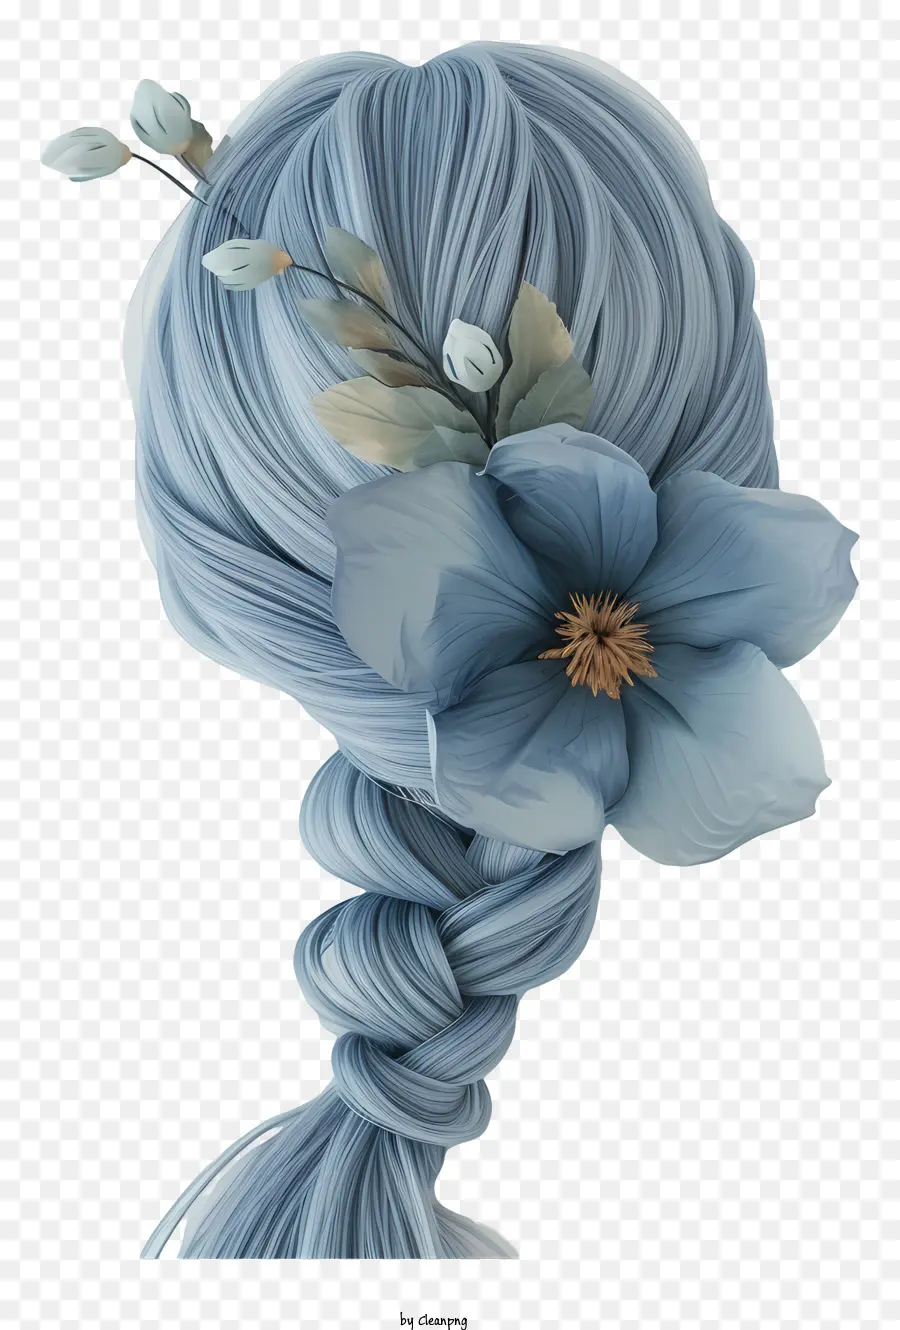 braided hair wig painting woman long blonde hair blue floral headband